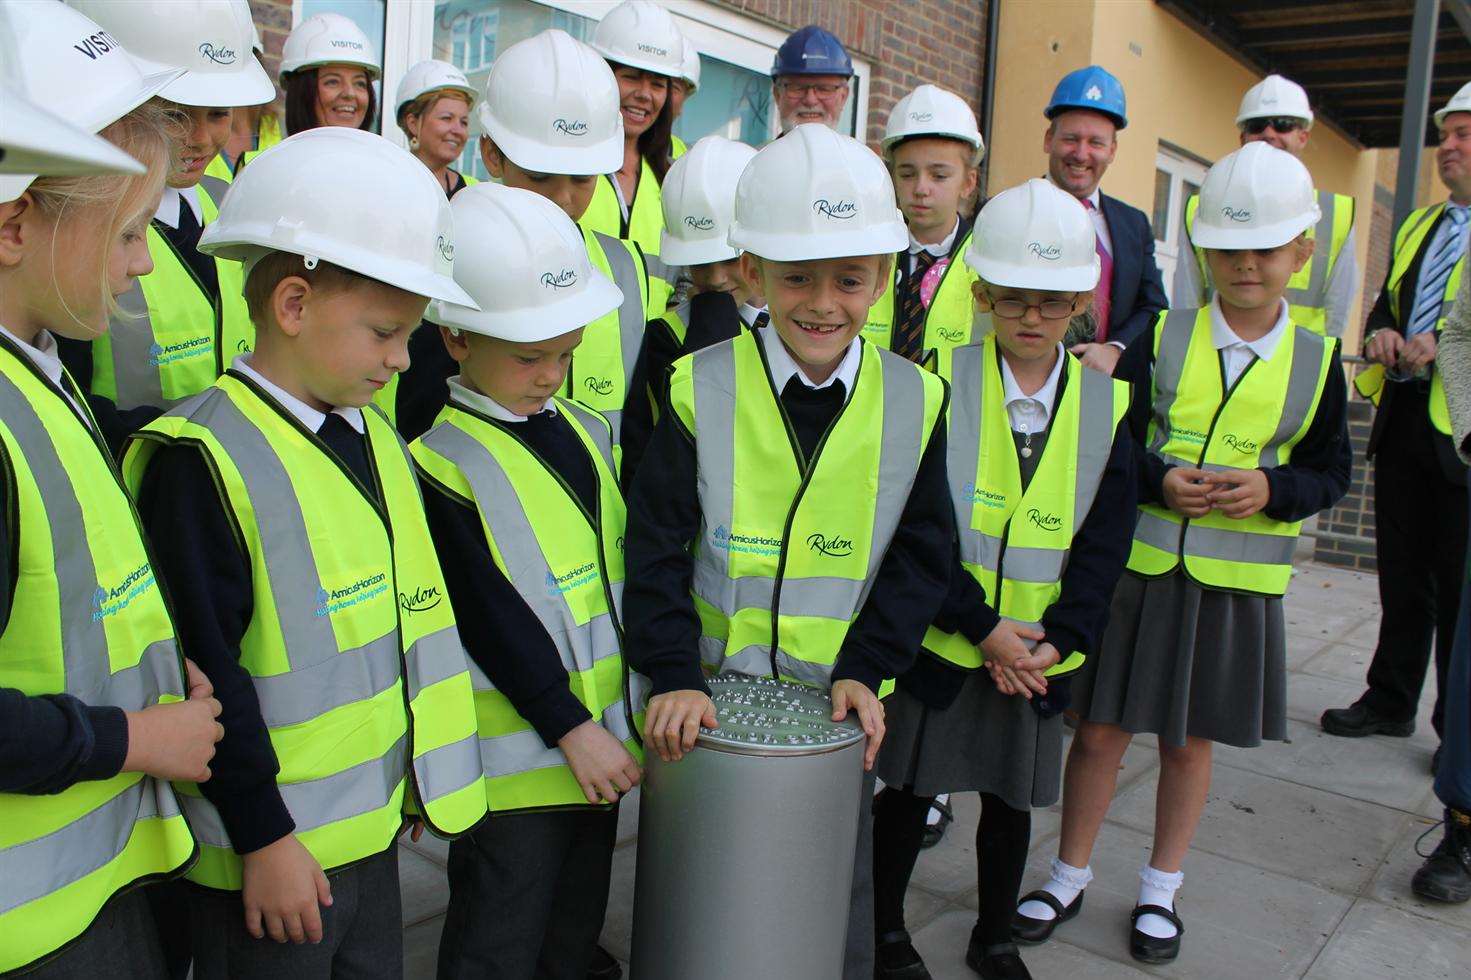 Regis Manor Primary School pupils put the lid on the time capsule